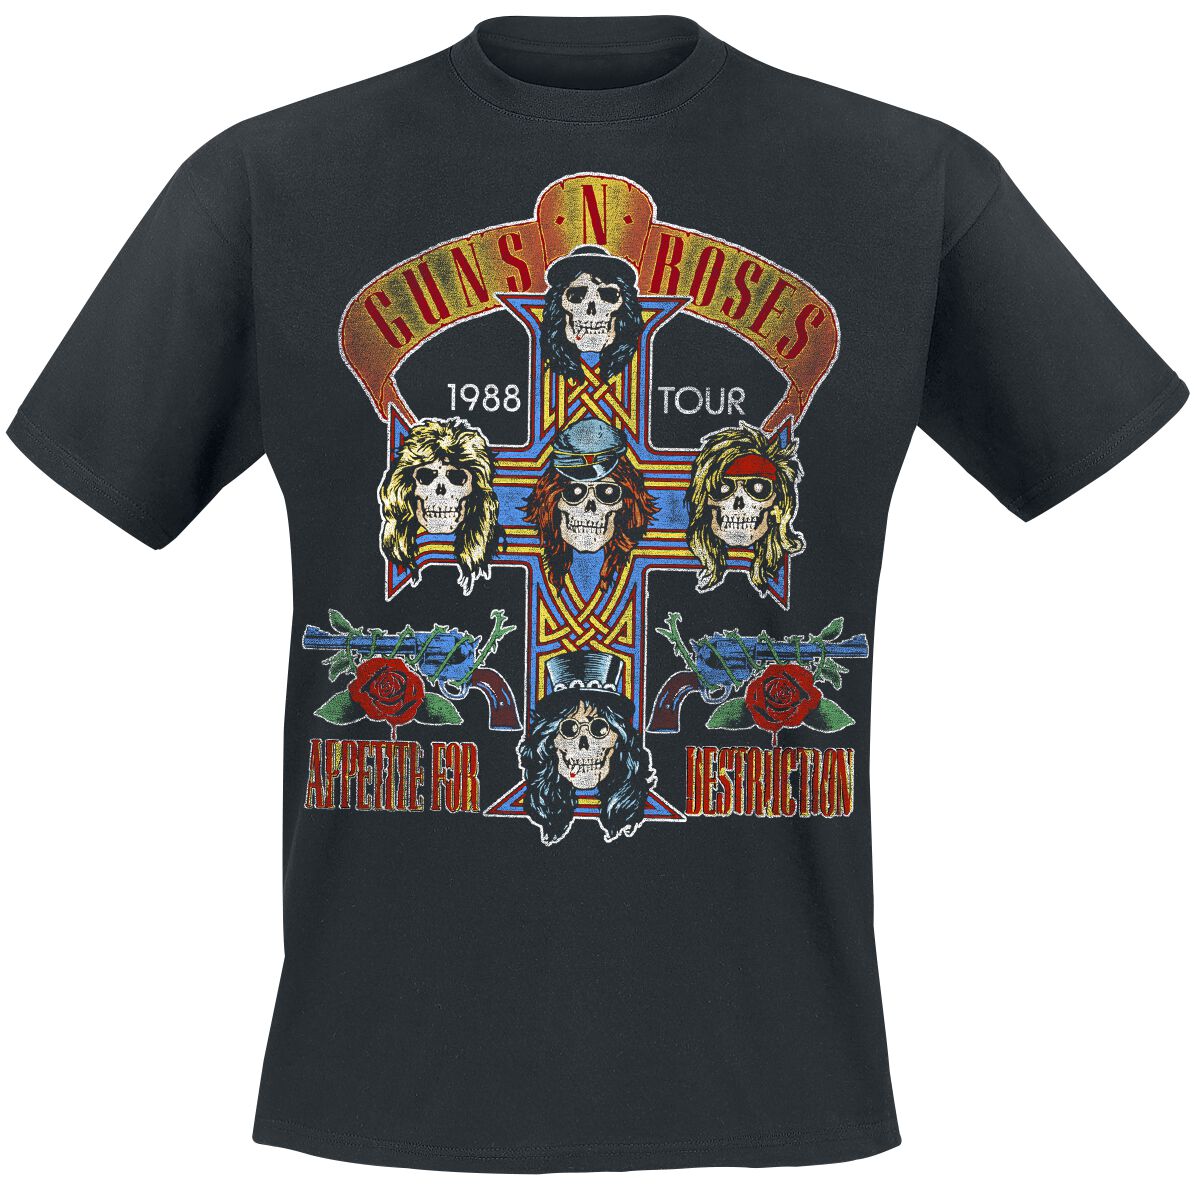 Guns N` Roses Tour 1988 T-Shirt schwarz in L